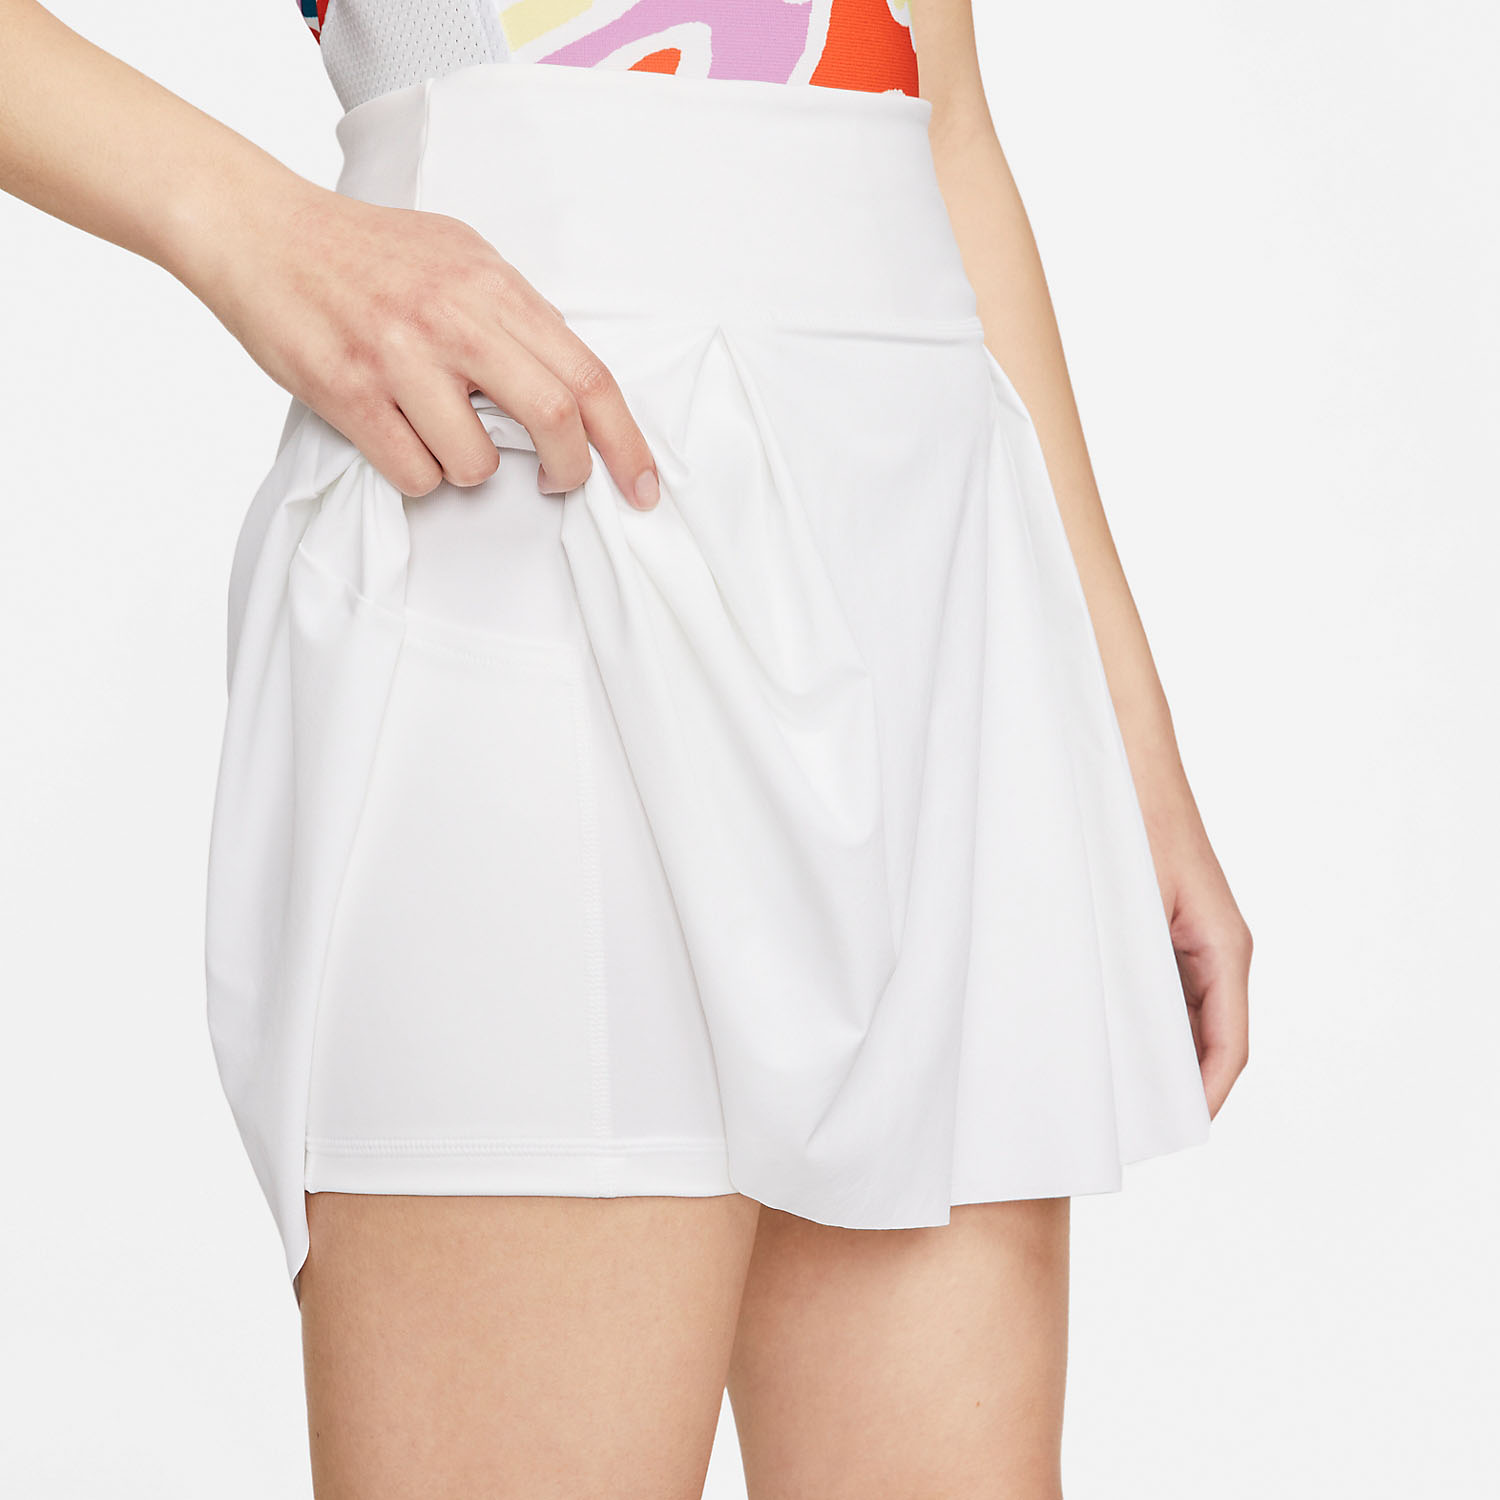 Nike Dri-FIT Advantage Women's Tennis Skirt - White/Black